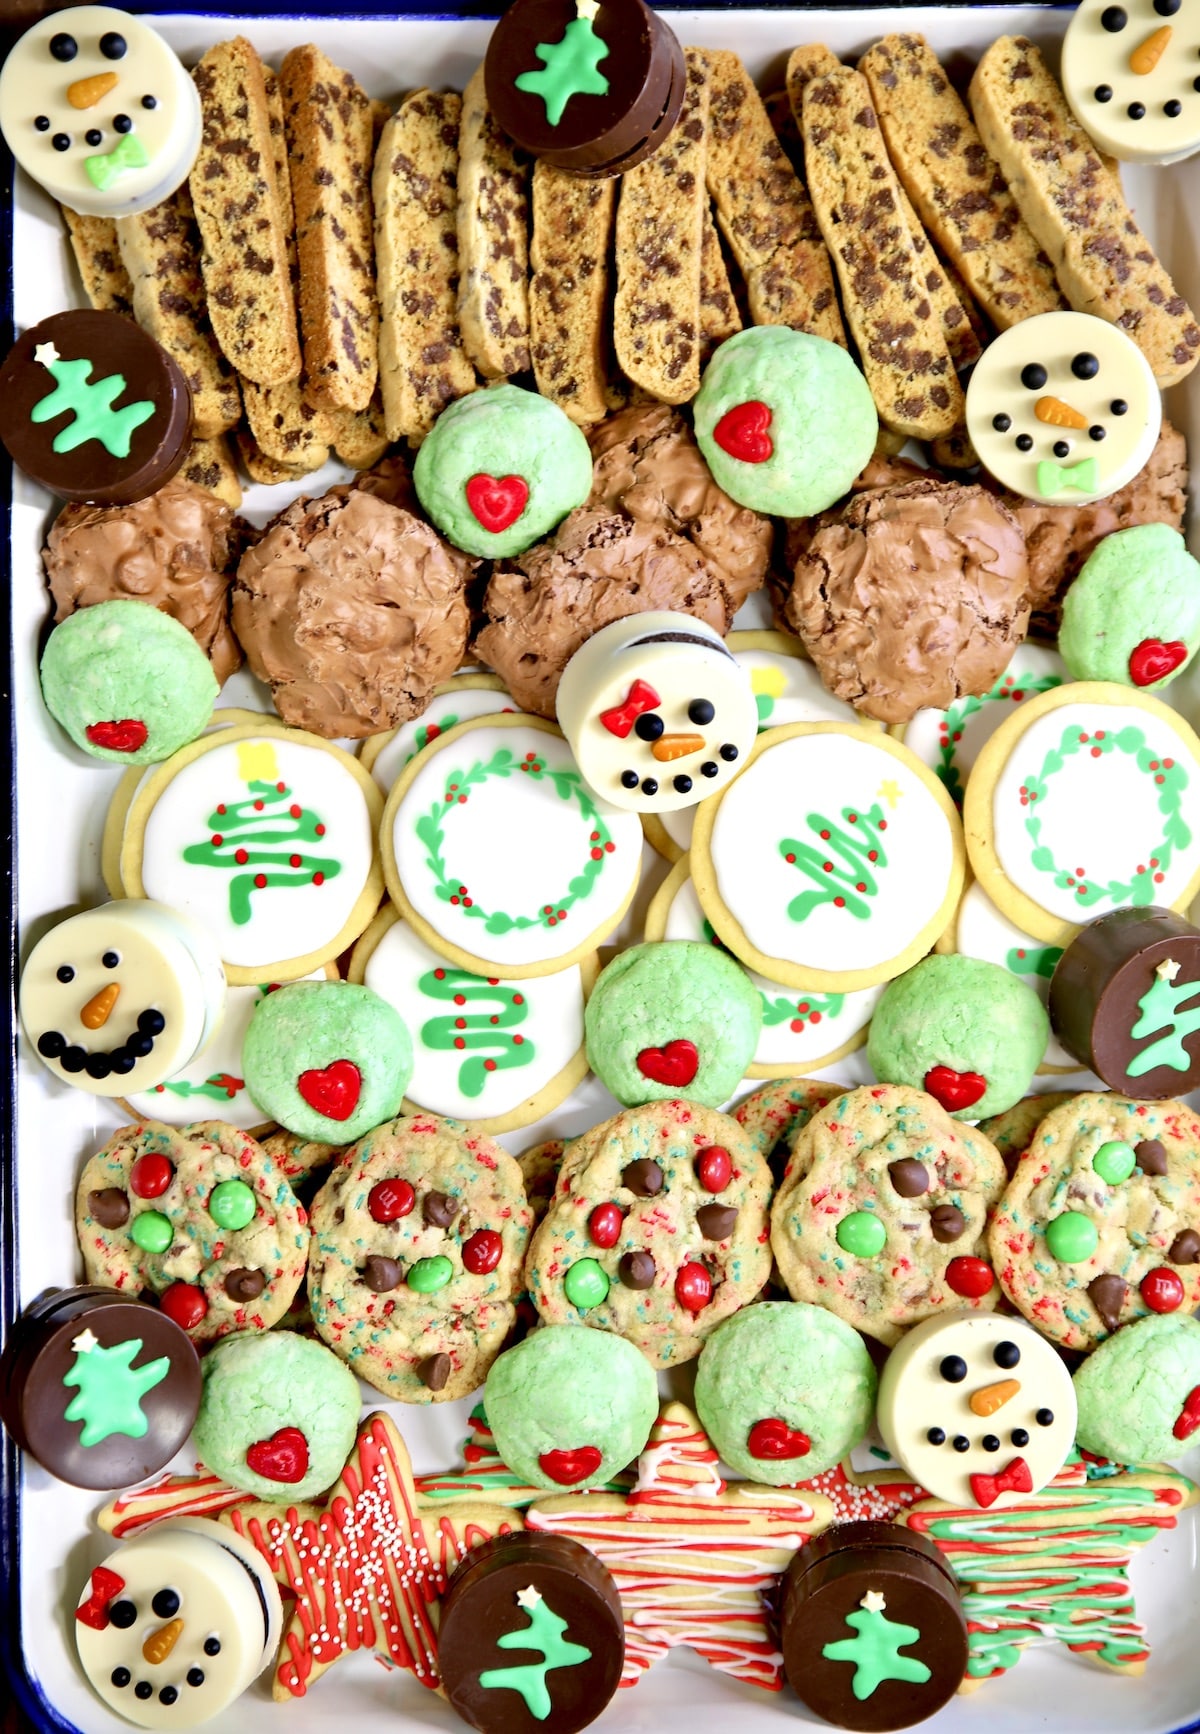 Platter of Christmas Cookies.